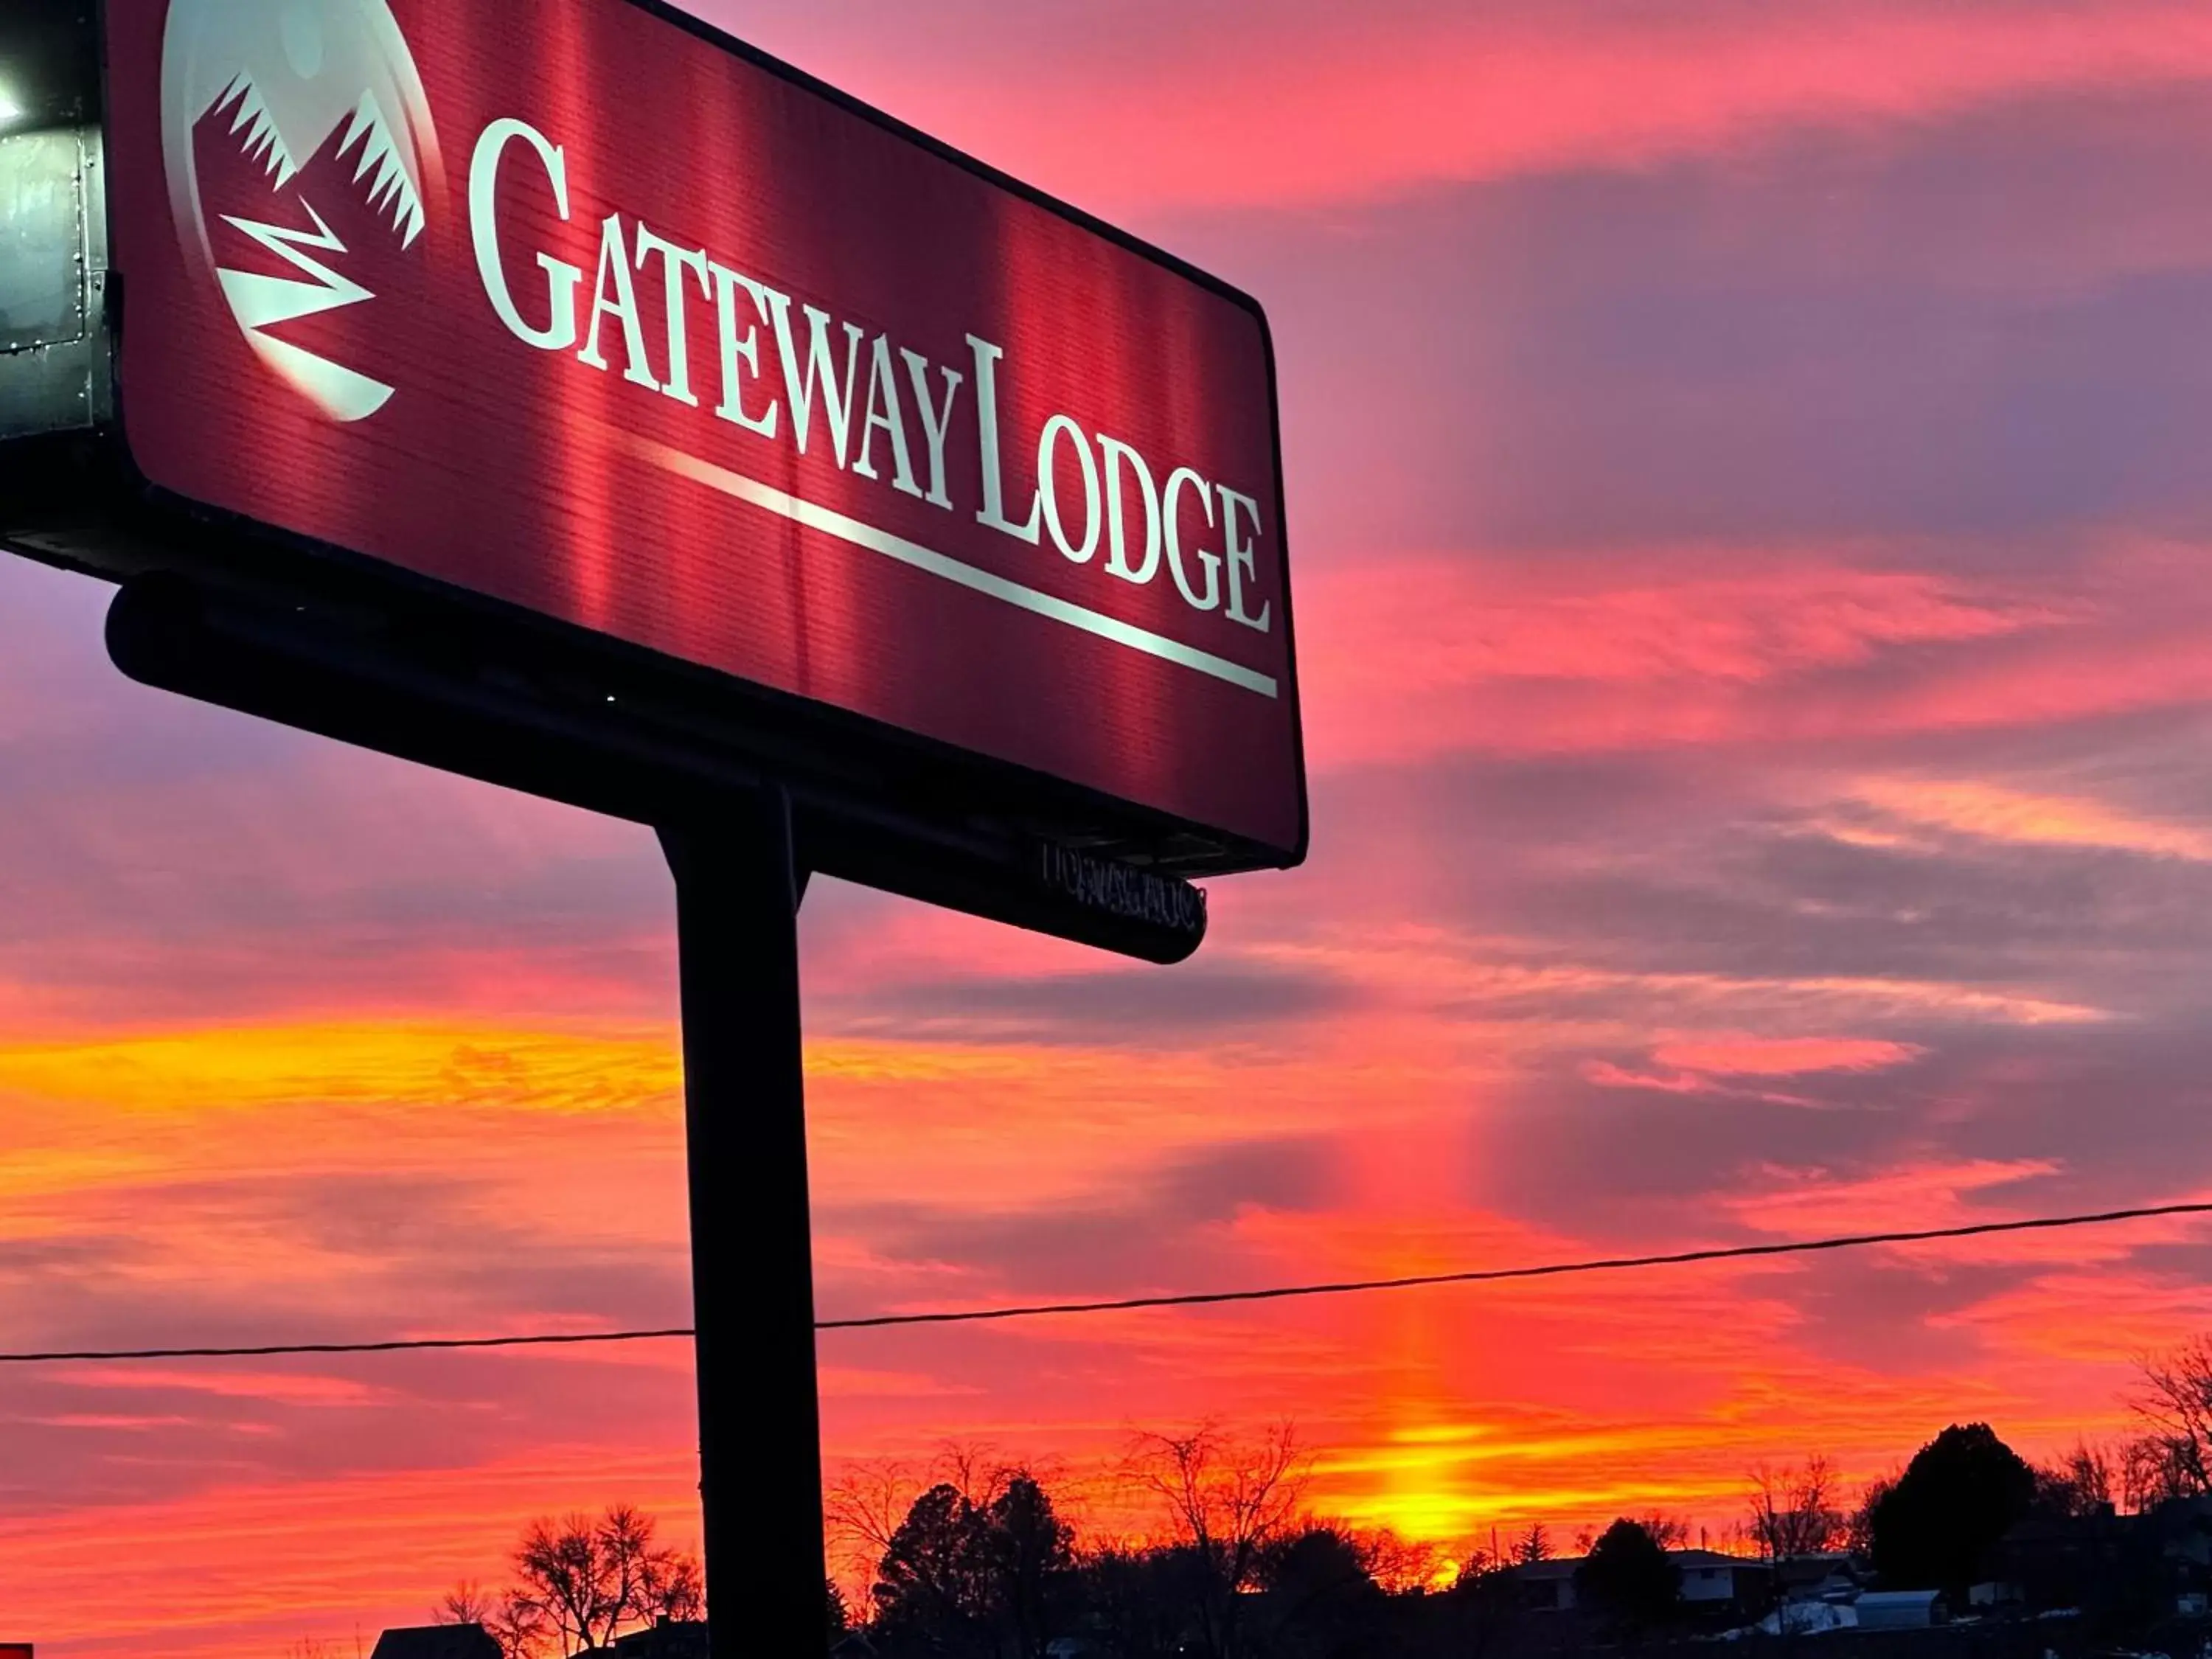 Property logo or sign, Sunrise/Sunset in Gateway Lodge